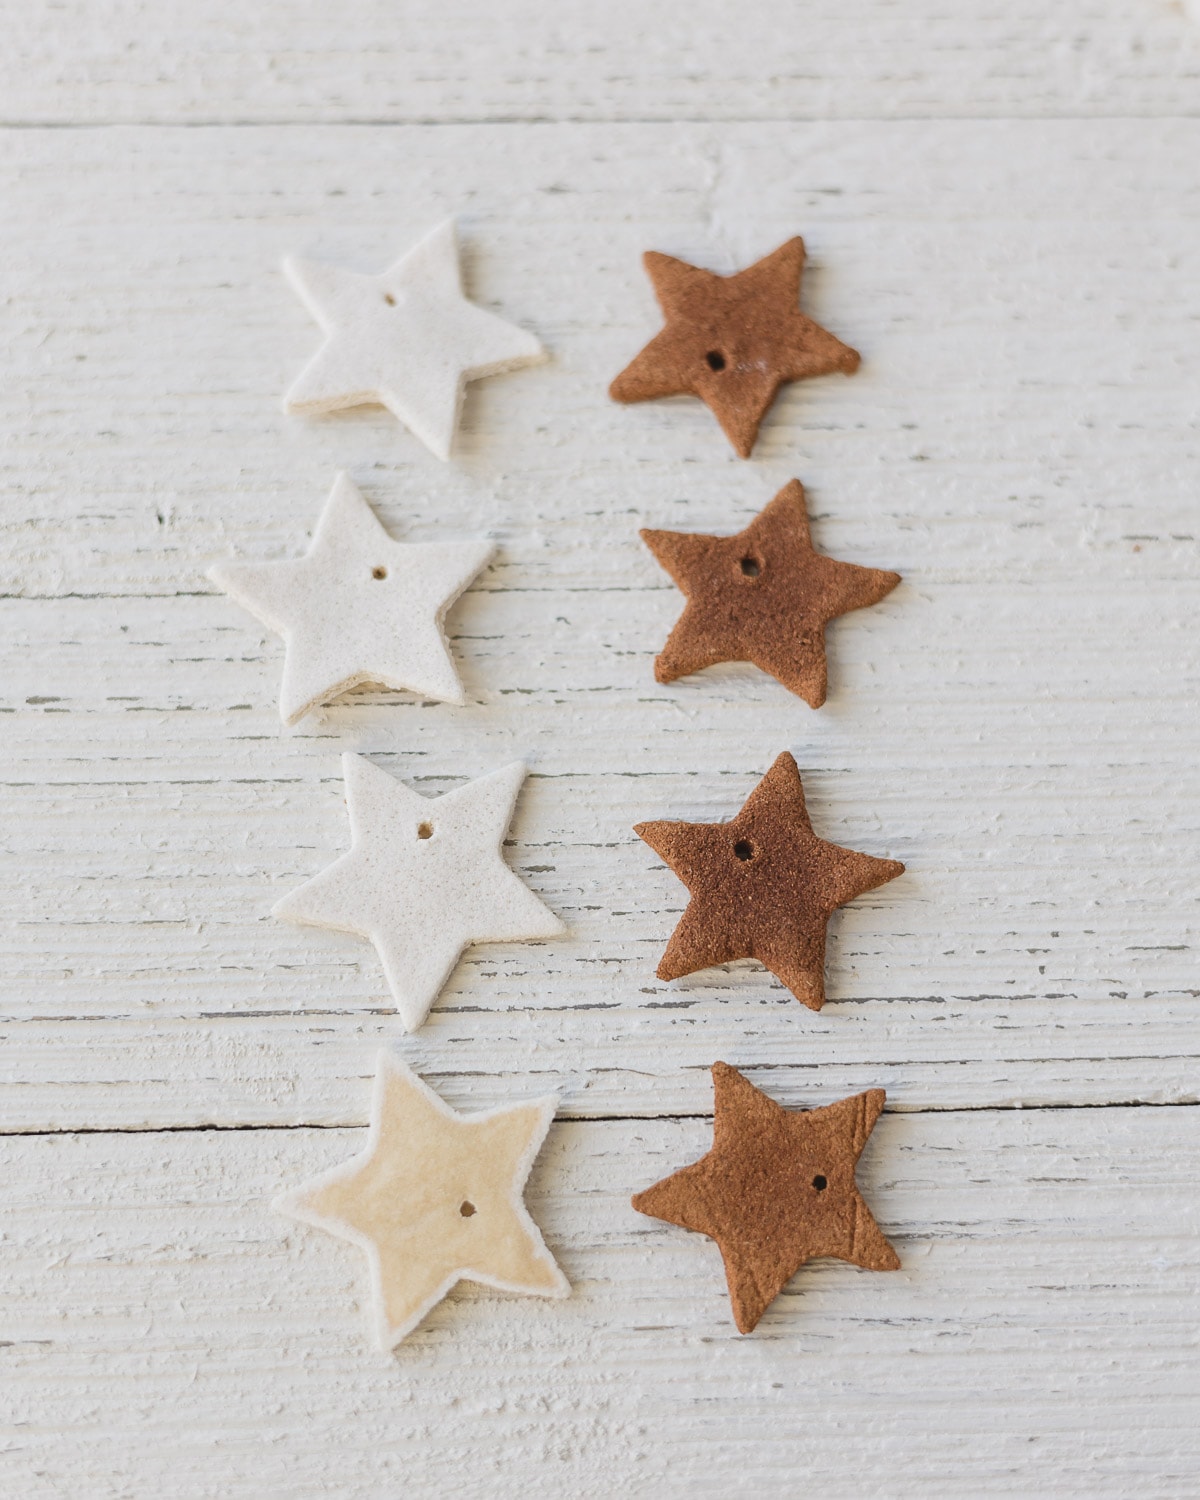 Salt dough stars and cinnamon applesauce stars on a wooden surface.